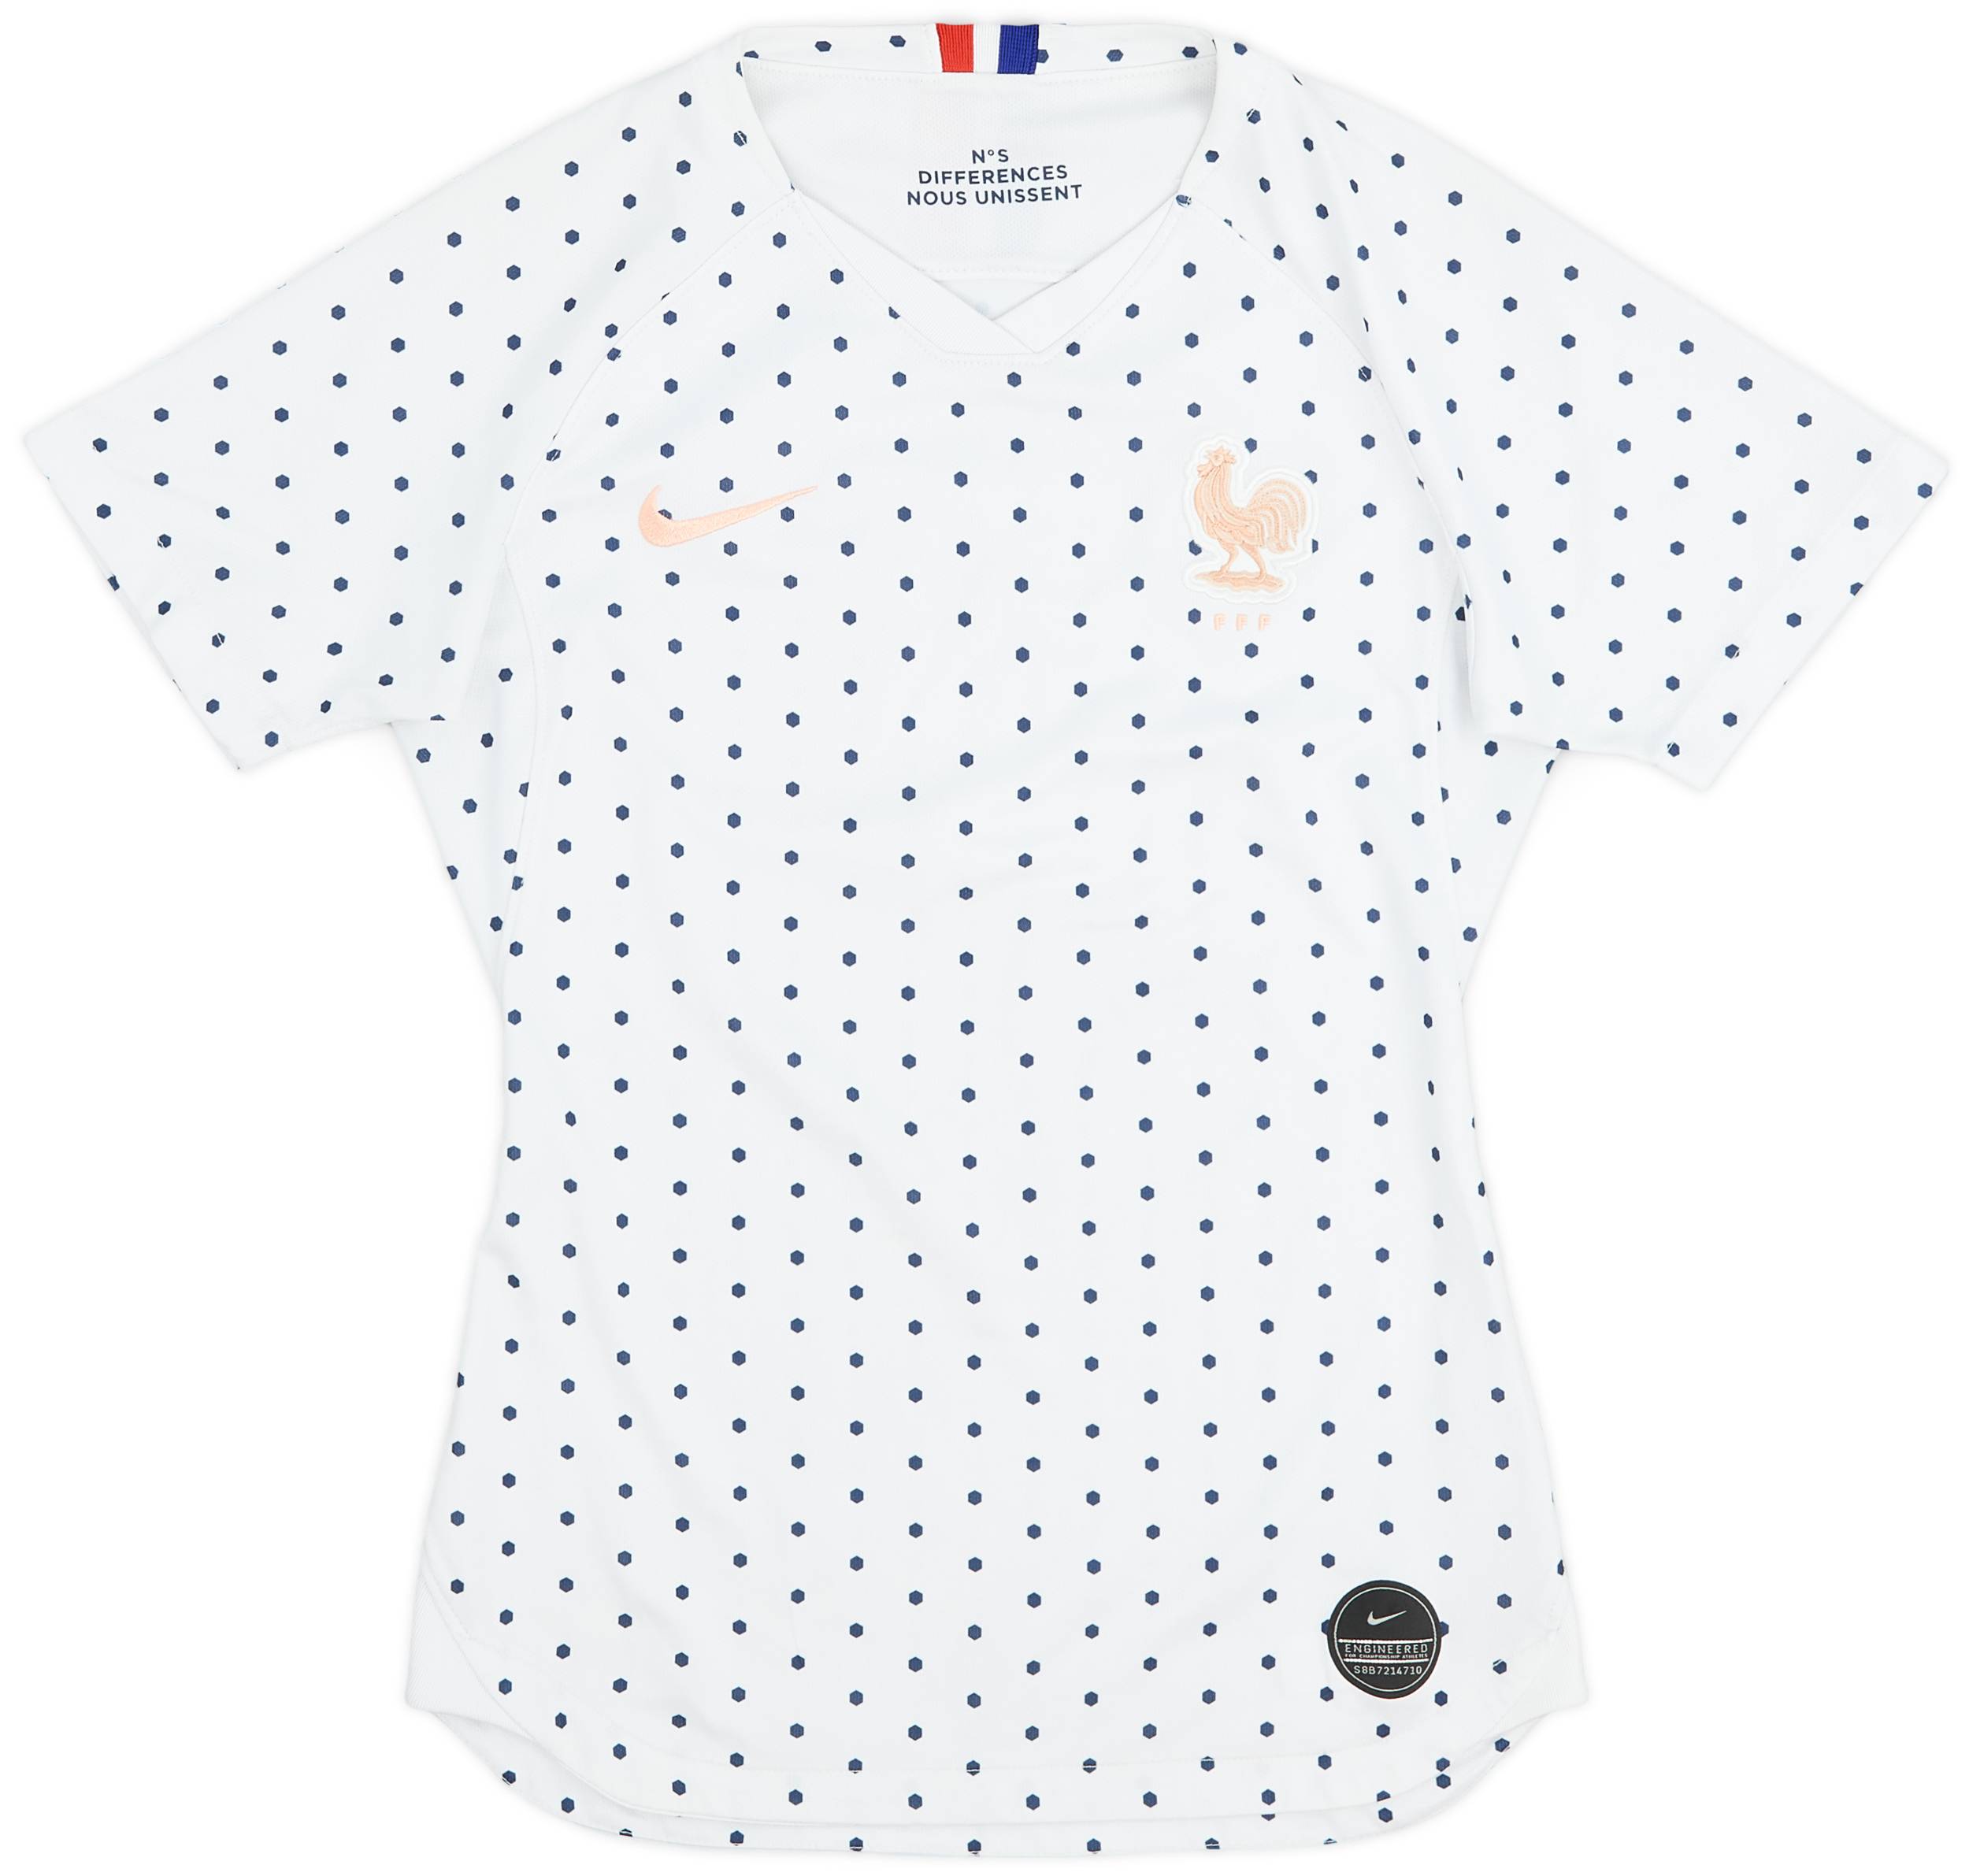 2019-20 France Women's Away Shirt - 9/10 - (Women's XS)